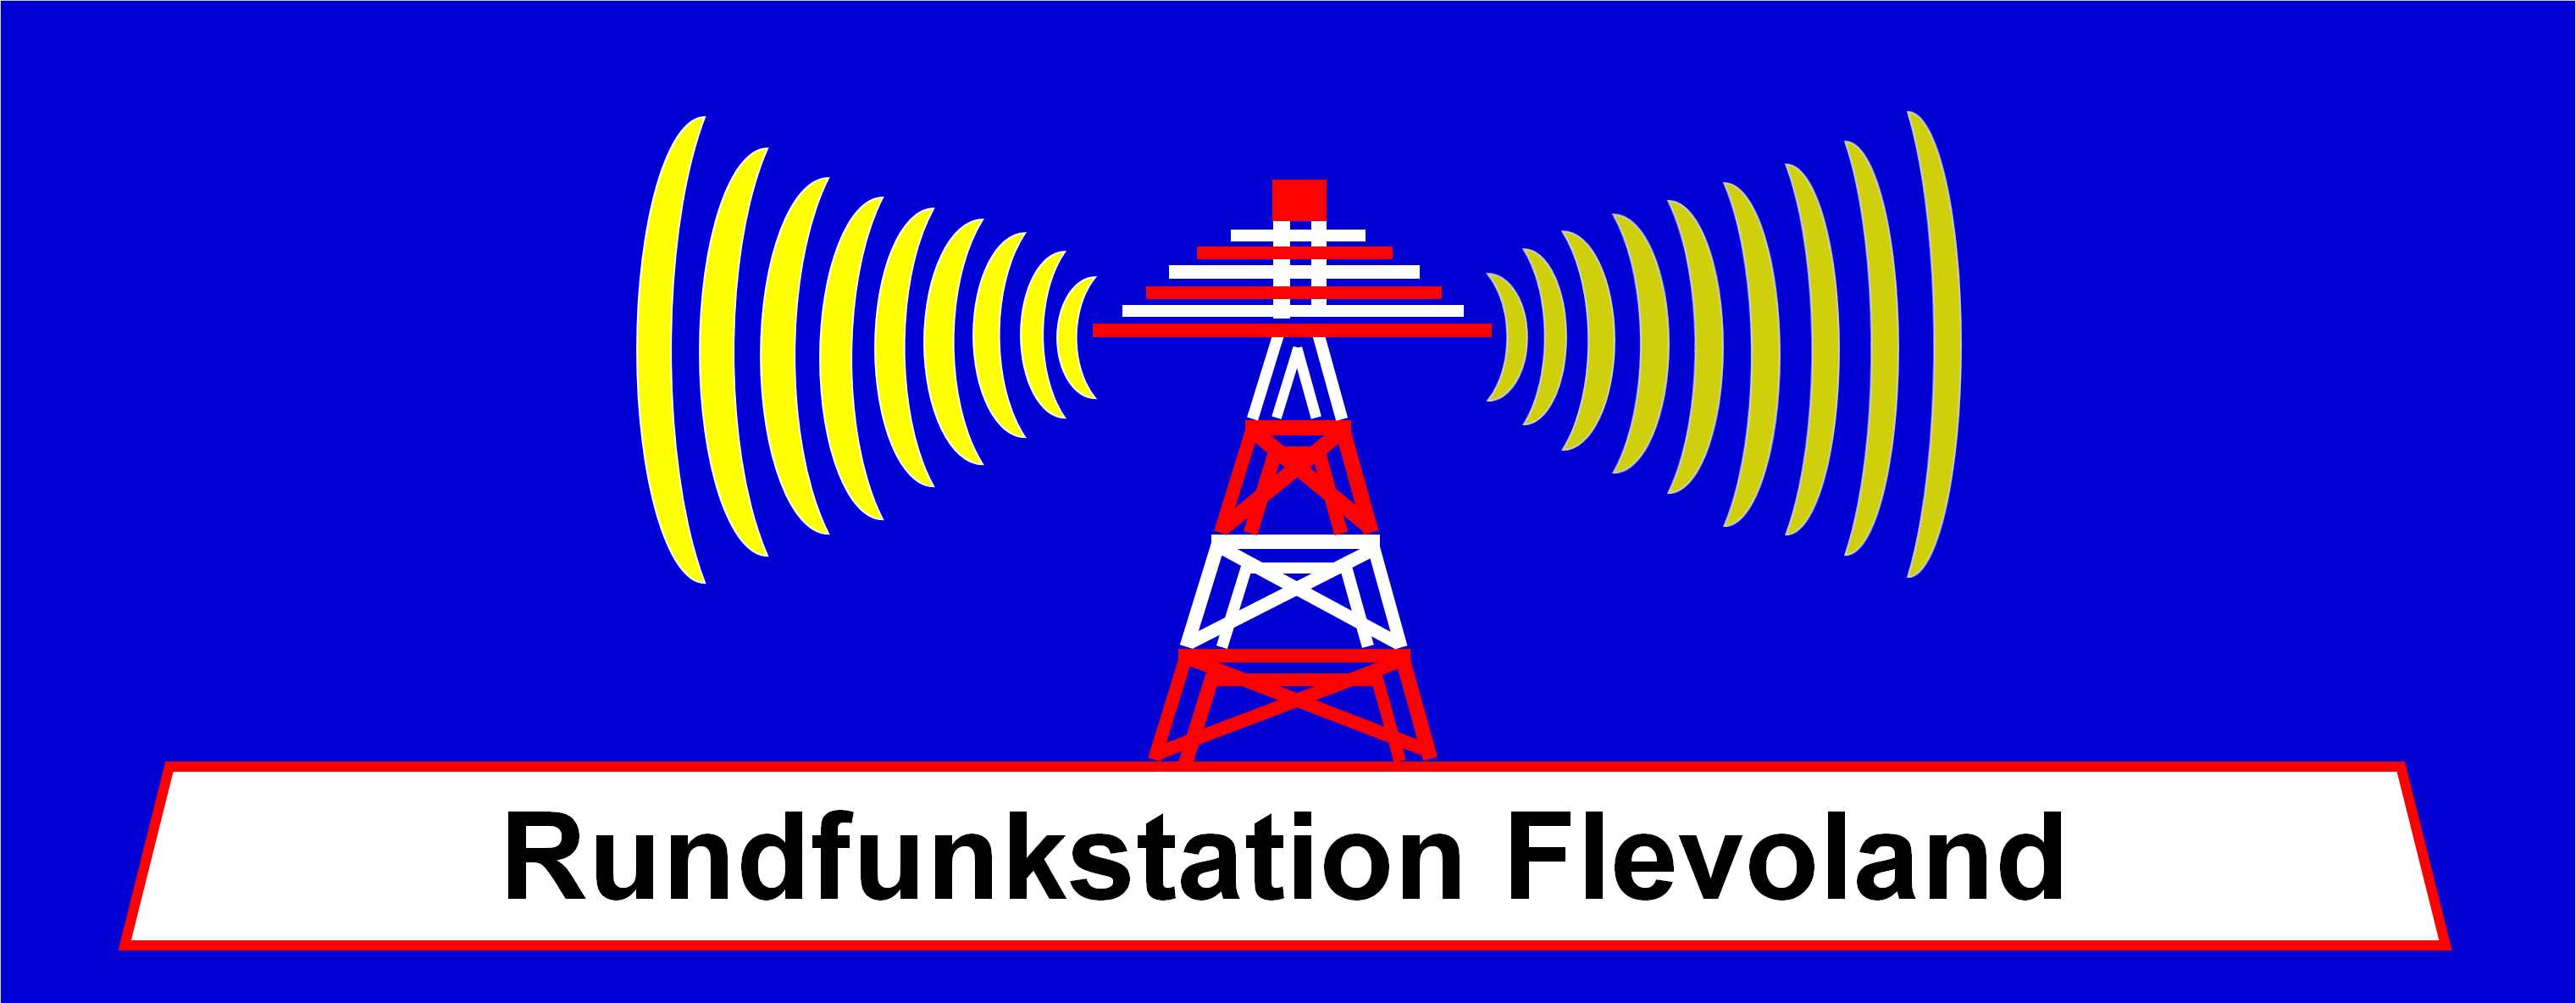 Rundfunkstation Flevoland